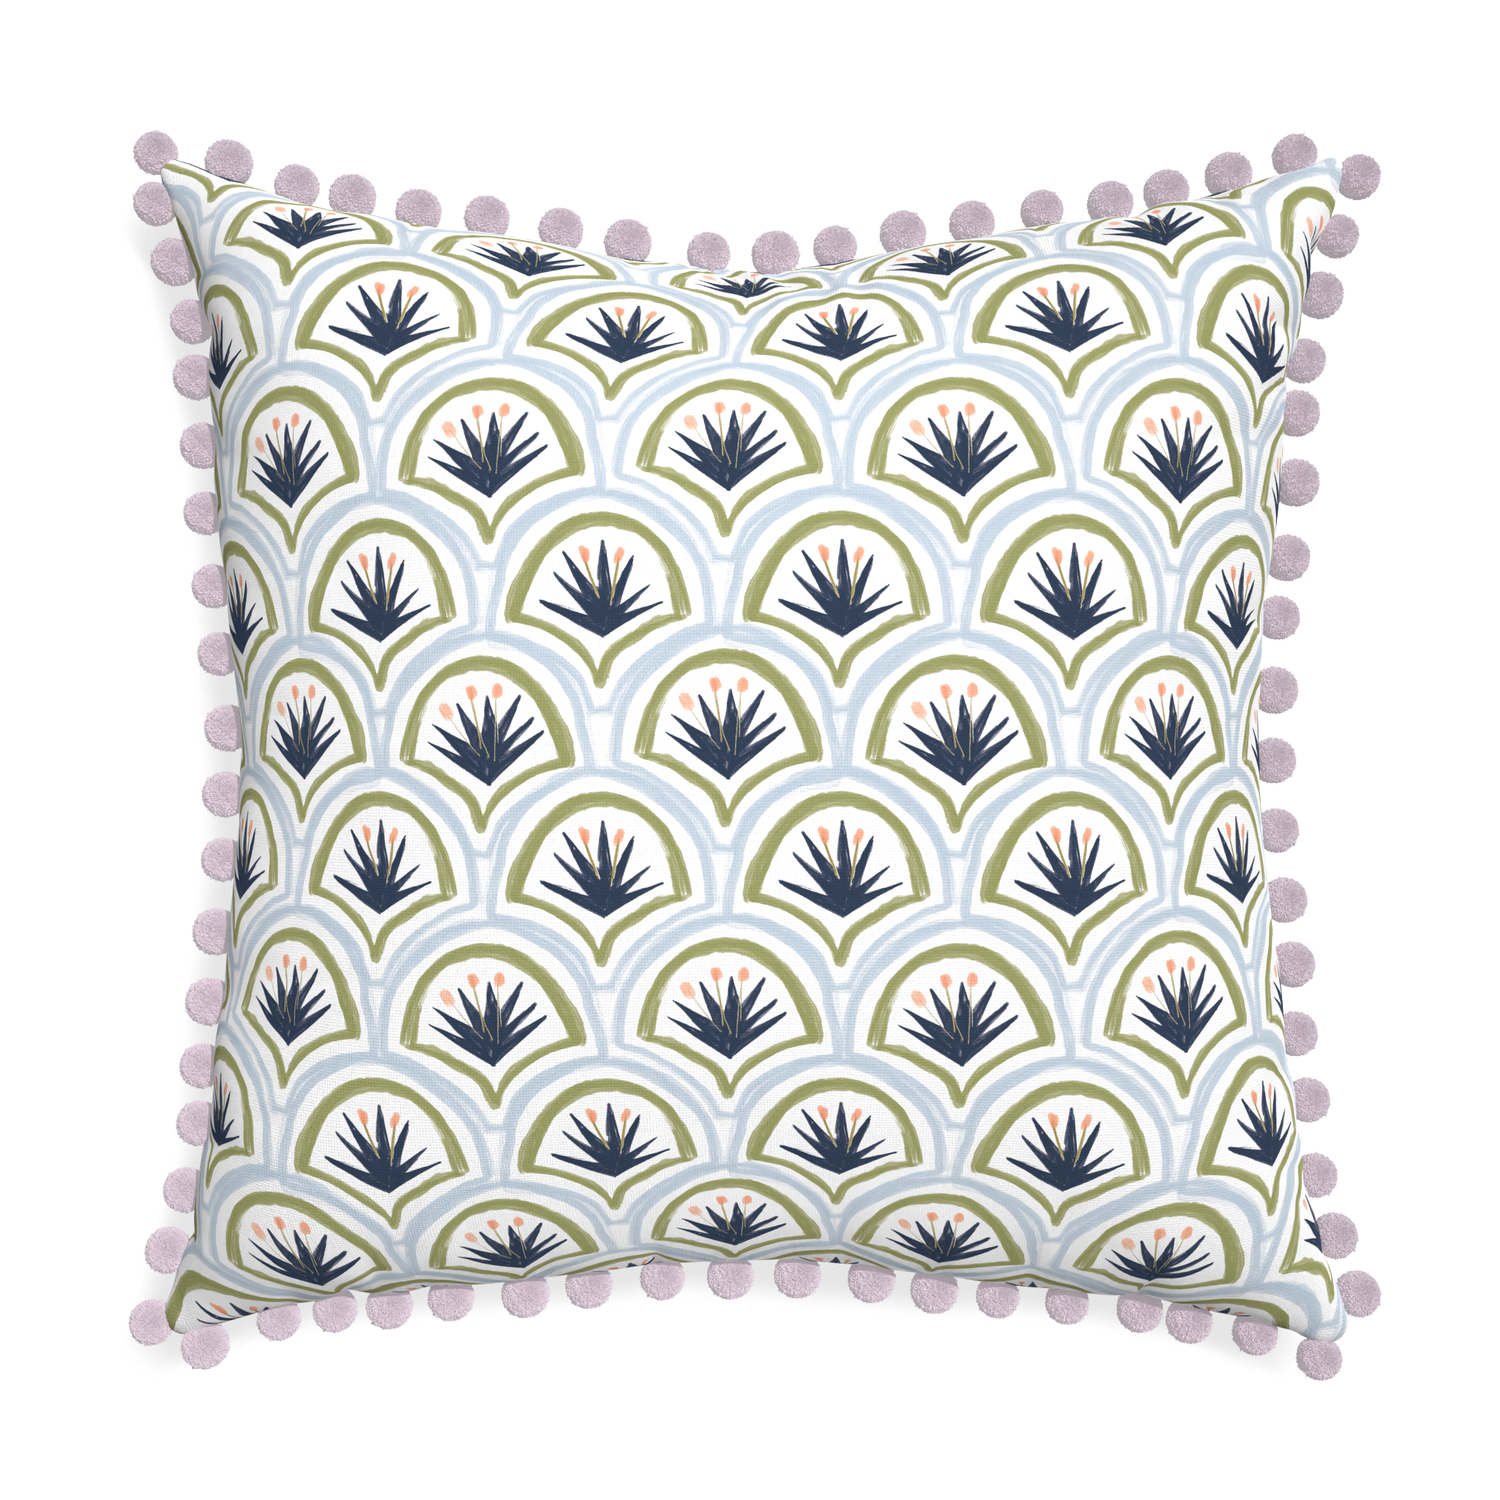 Euro-sham thatcher midnight custom art deco palm patternpillow with l on white background